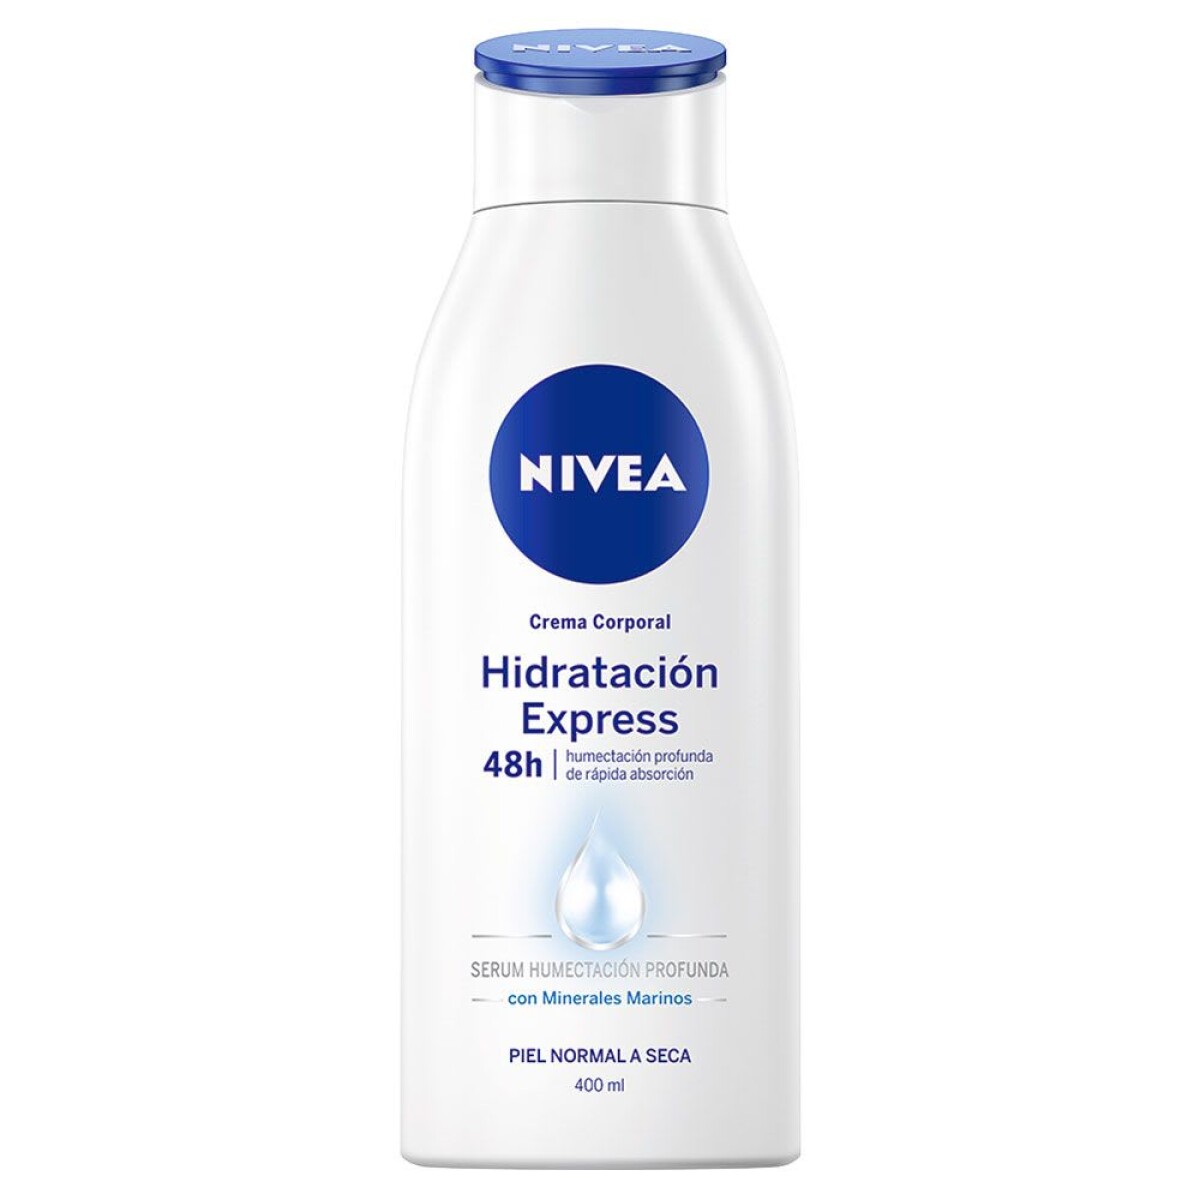 Crema Corporal NIVEA 400ml - Hidratación Express 